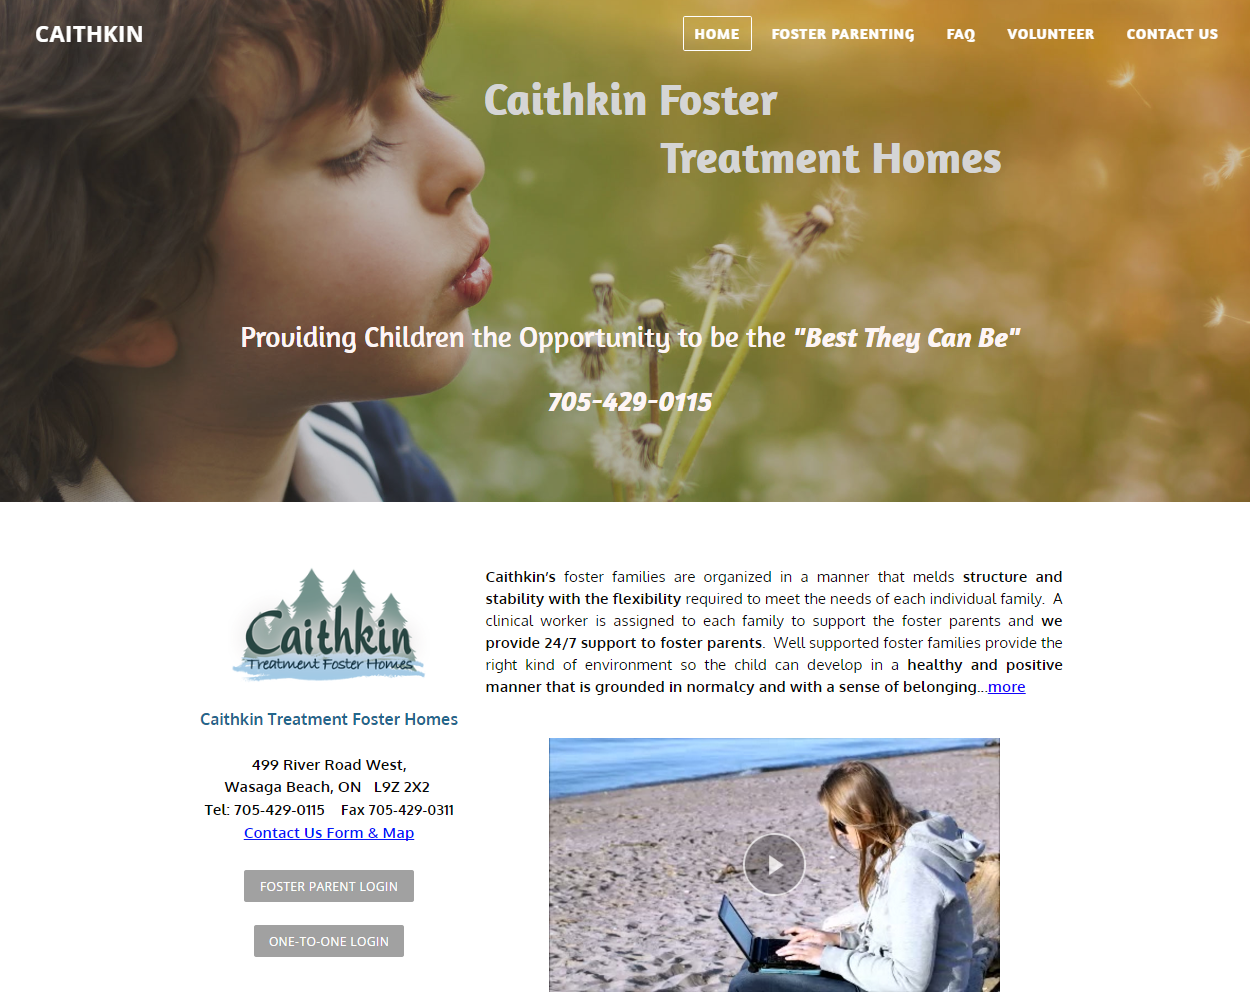 Caithkin Treatmet Foster Homes